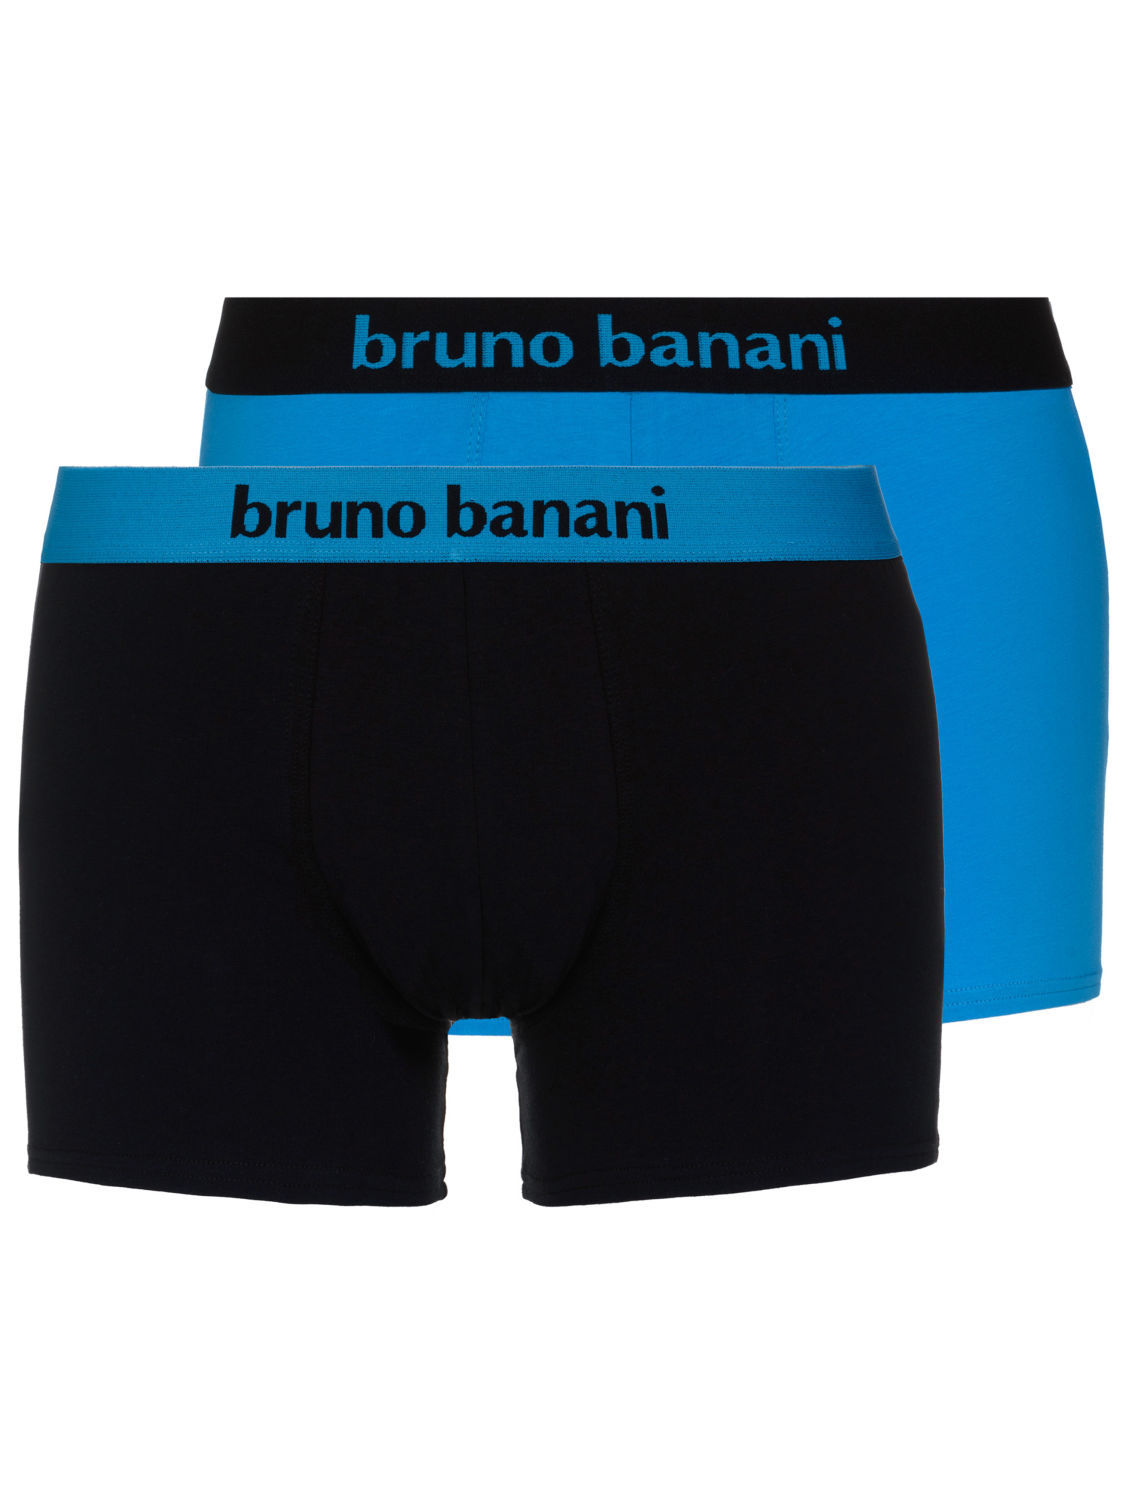 Bruno Banani Flowing 2Pack Short blau/schwarz